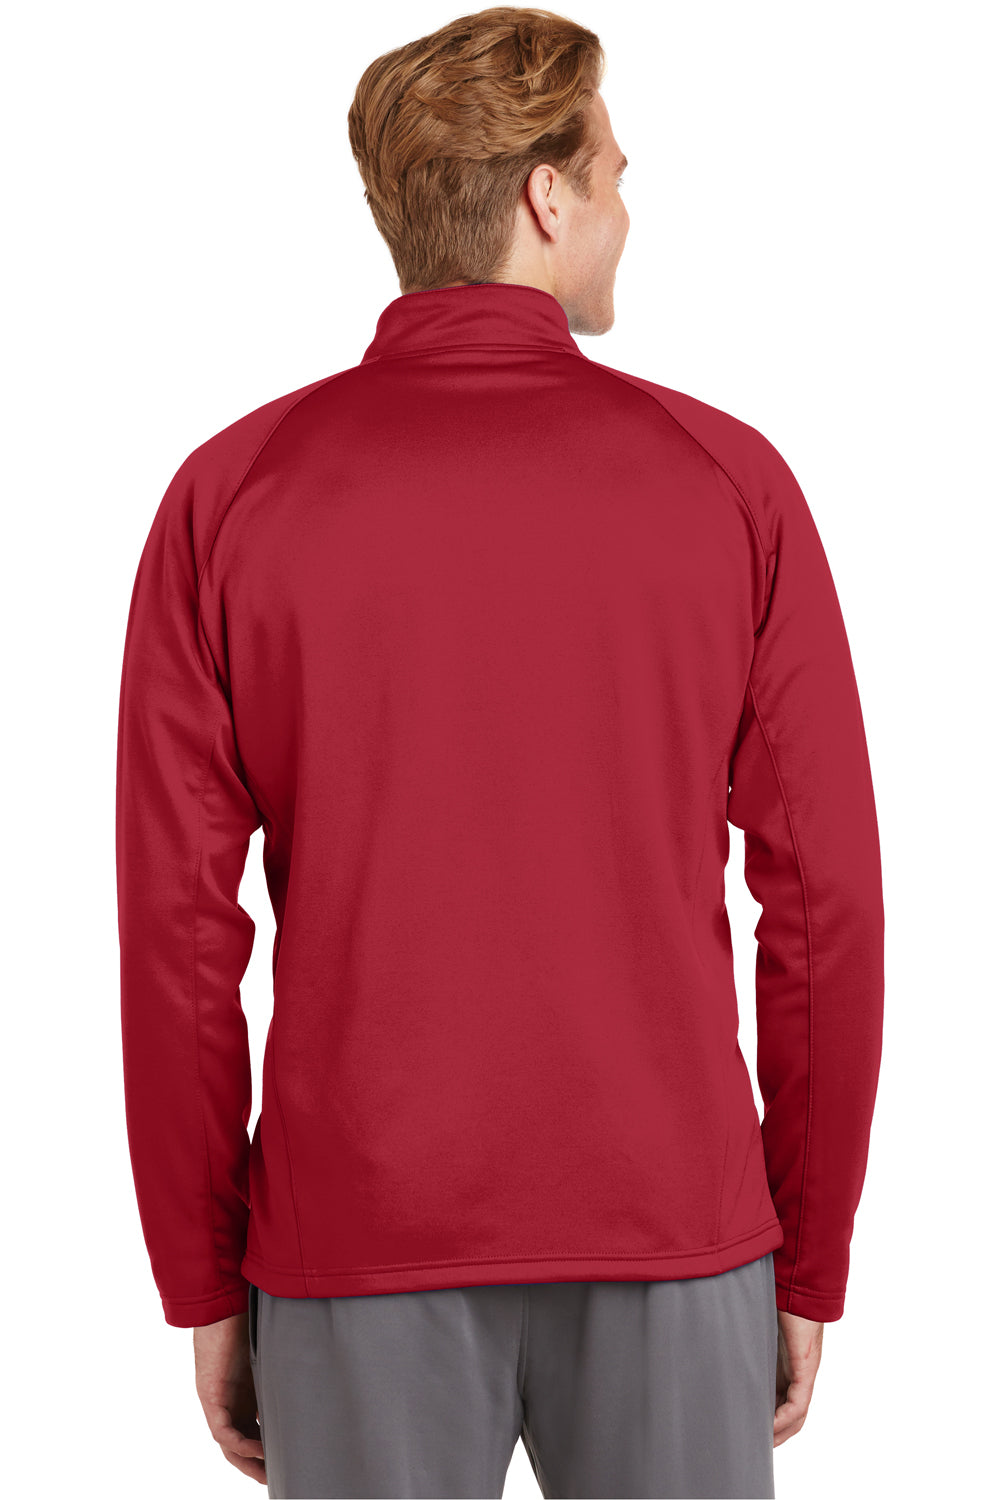 Sport-Tek F243 Mens Sport-Wick Moisture Wicking Fleece 1/4 Zip Sweatshirt Red Back